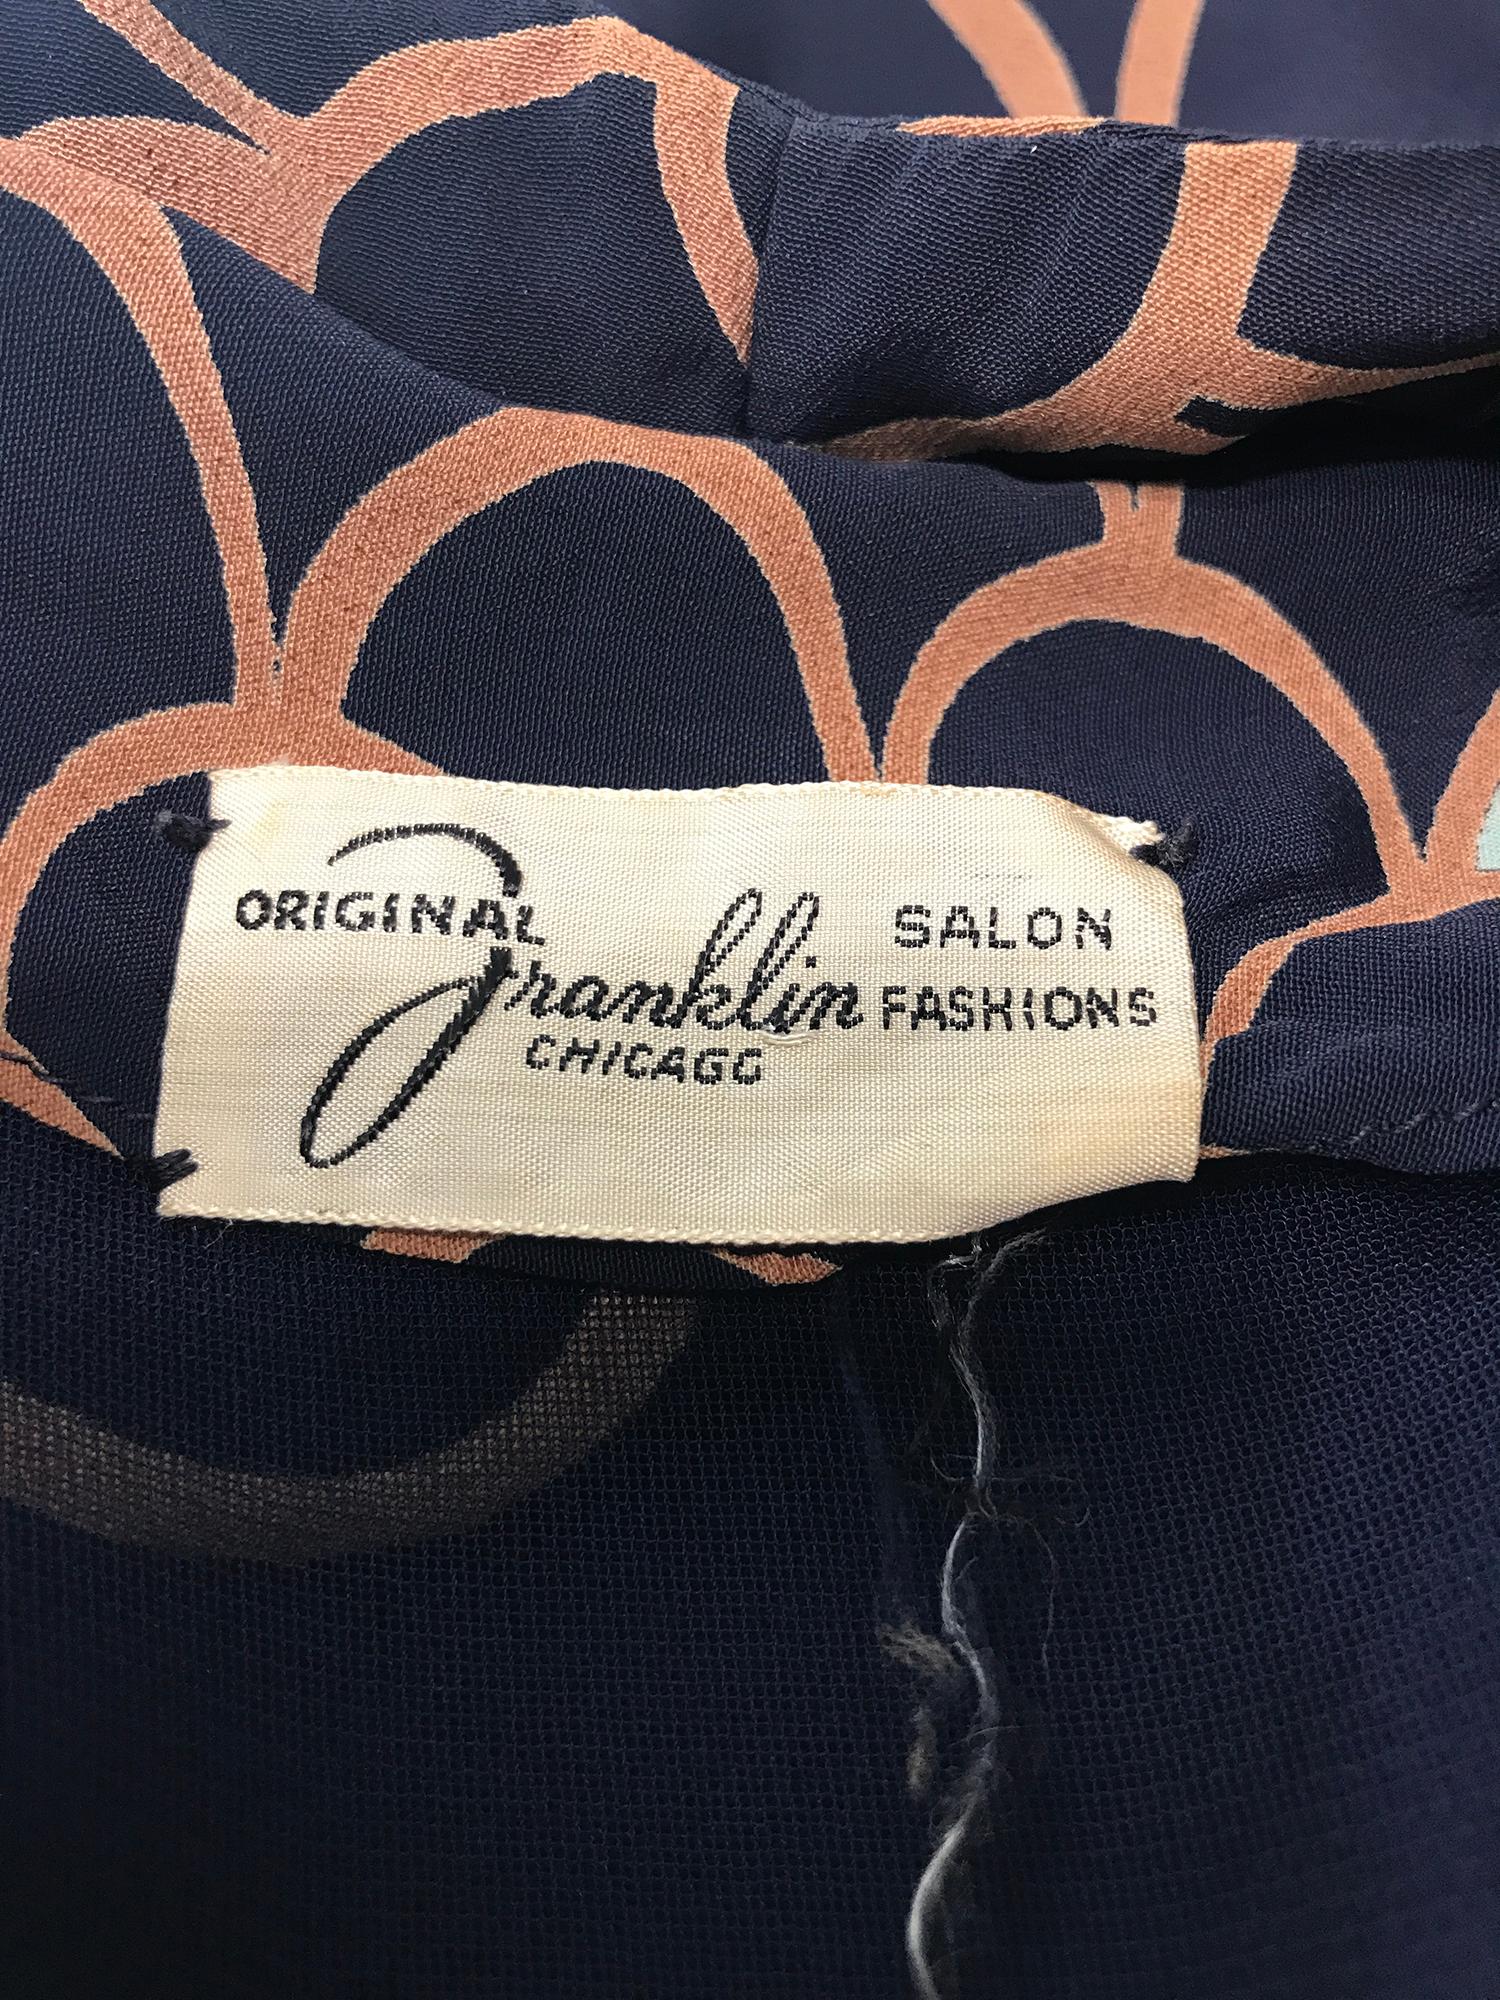 Vintage Original Franklin Fashions Chicago Rayon Print Day Dress 1940s 10